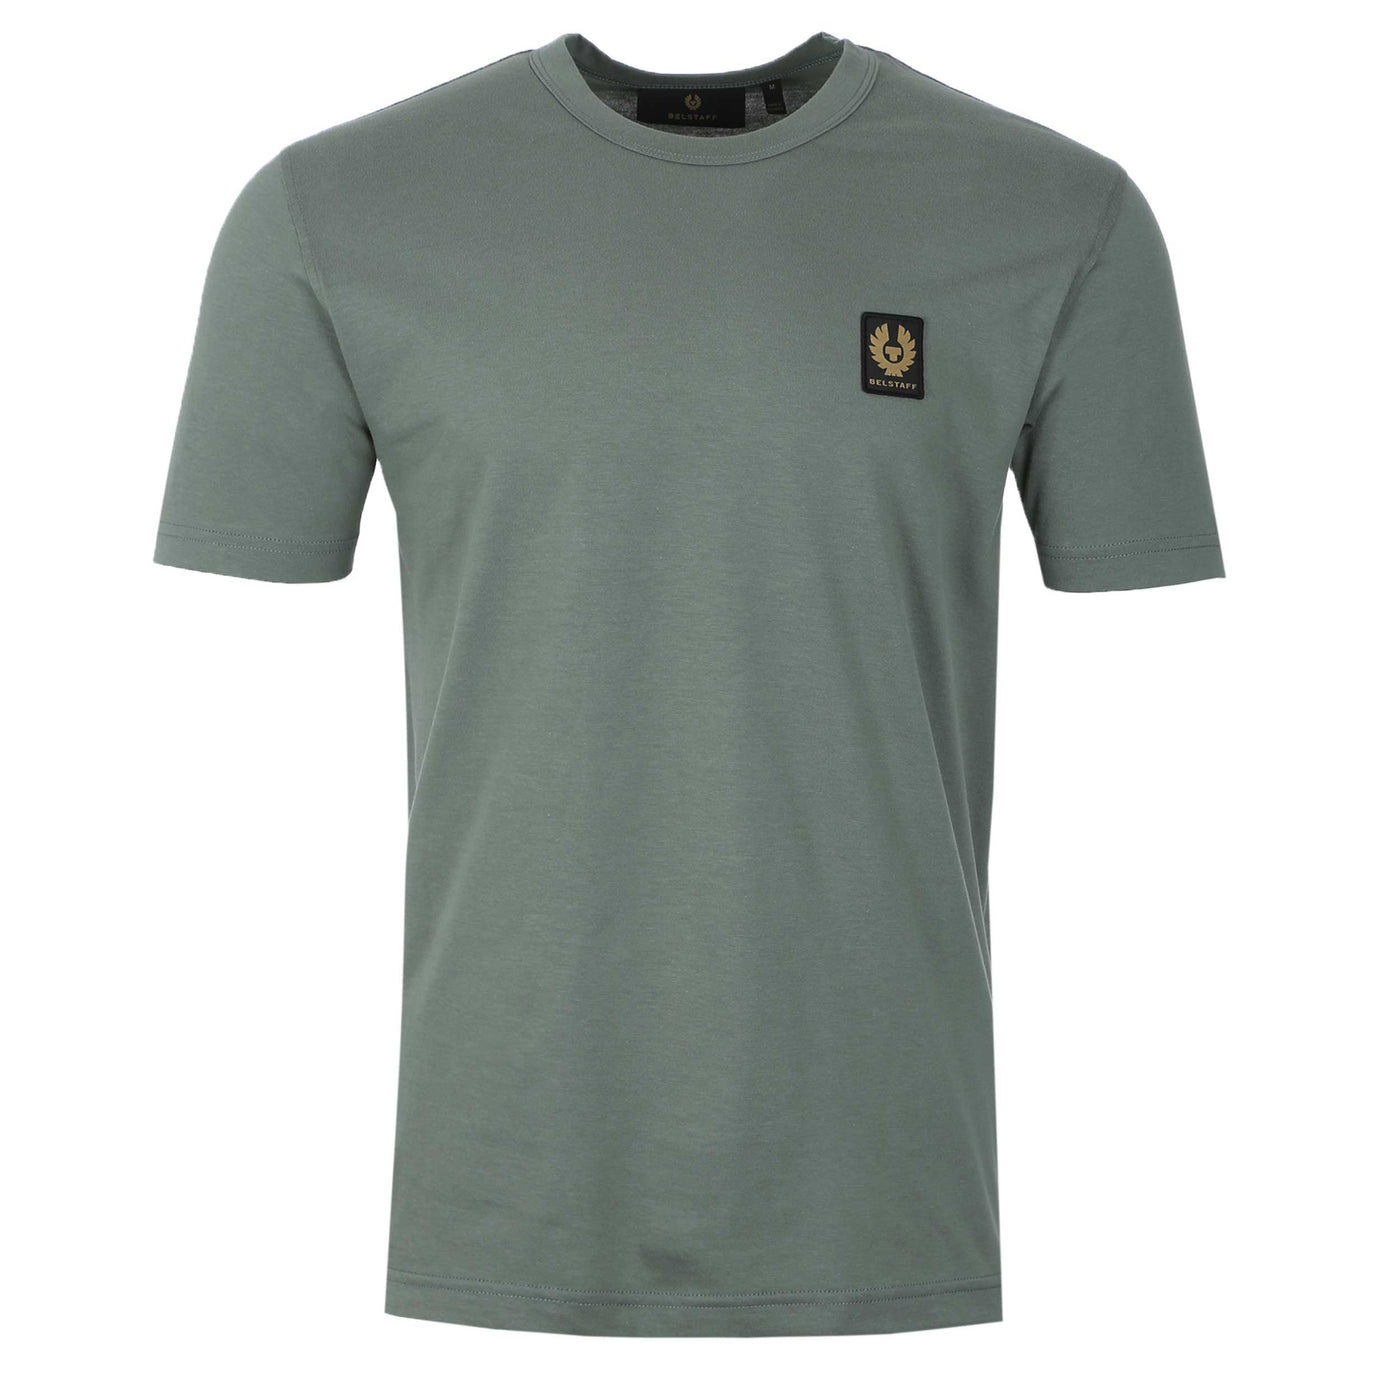 Belstaff Classic T-Shirt in Mineral Green